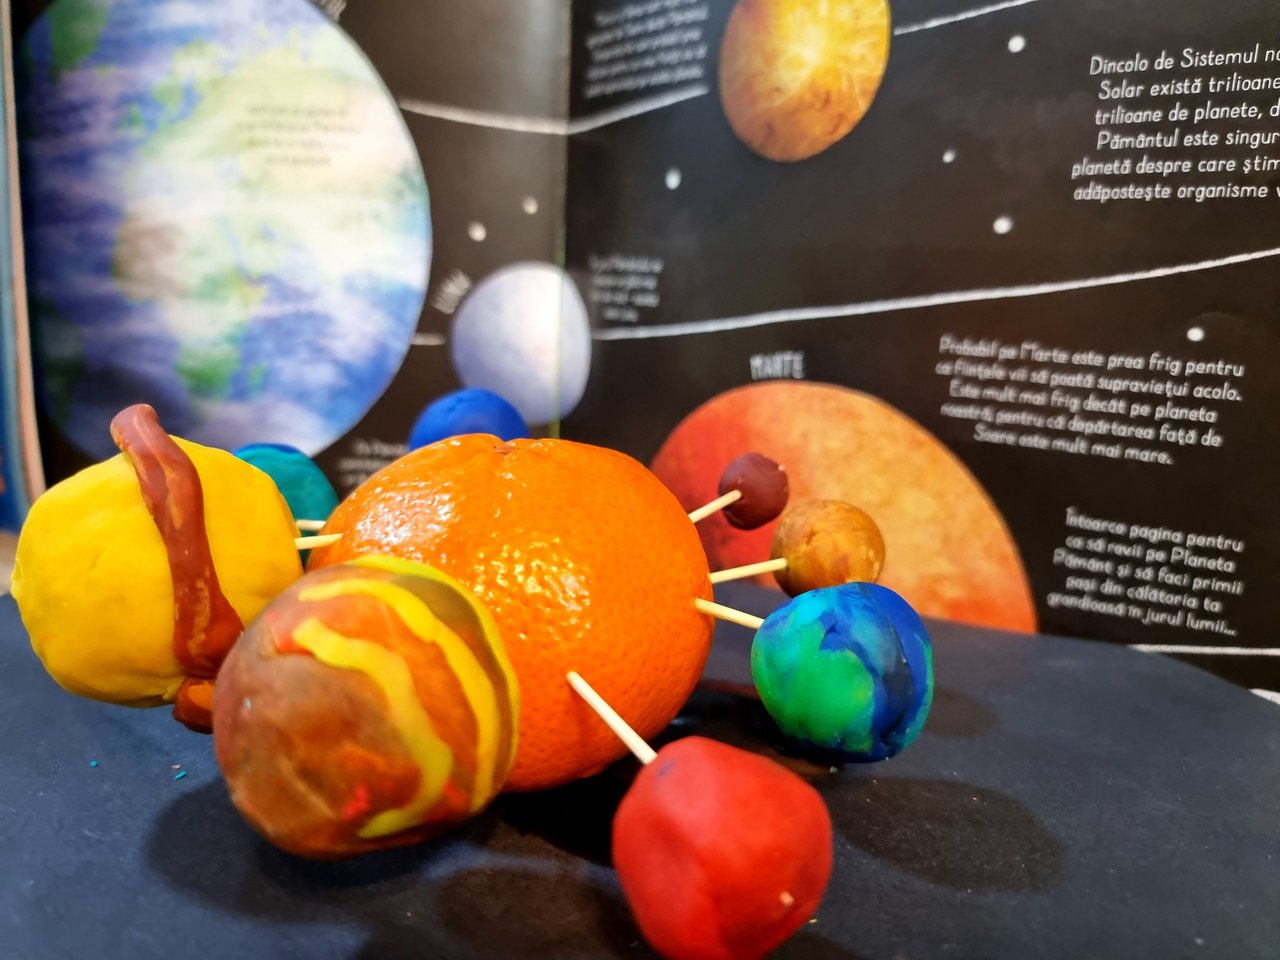 solar system model using playdough